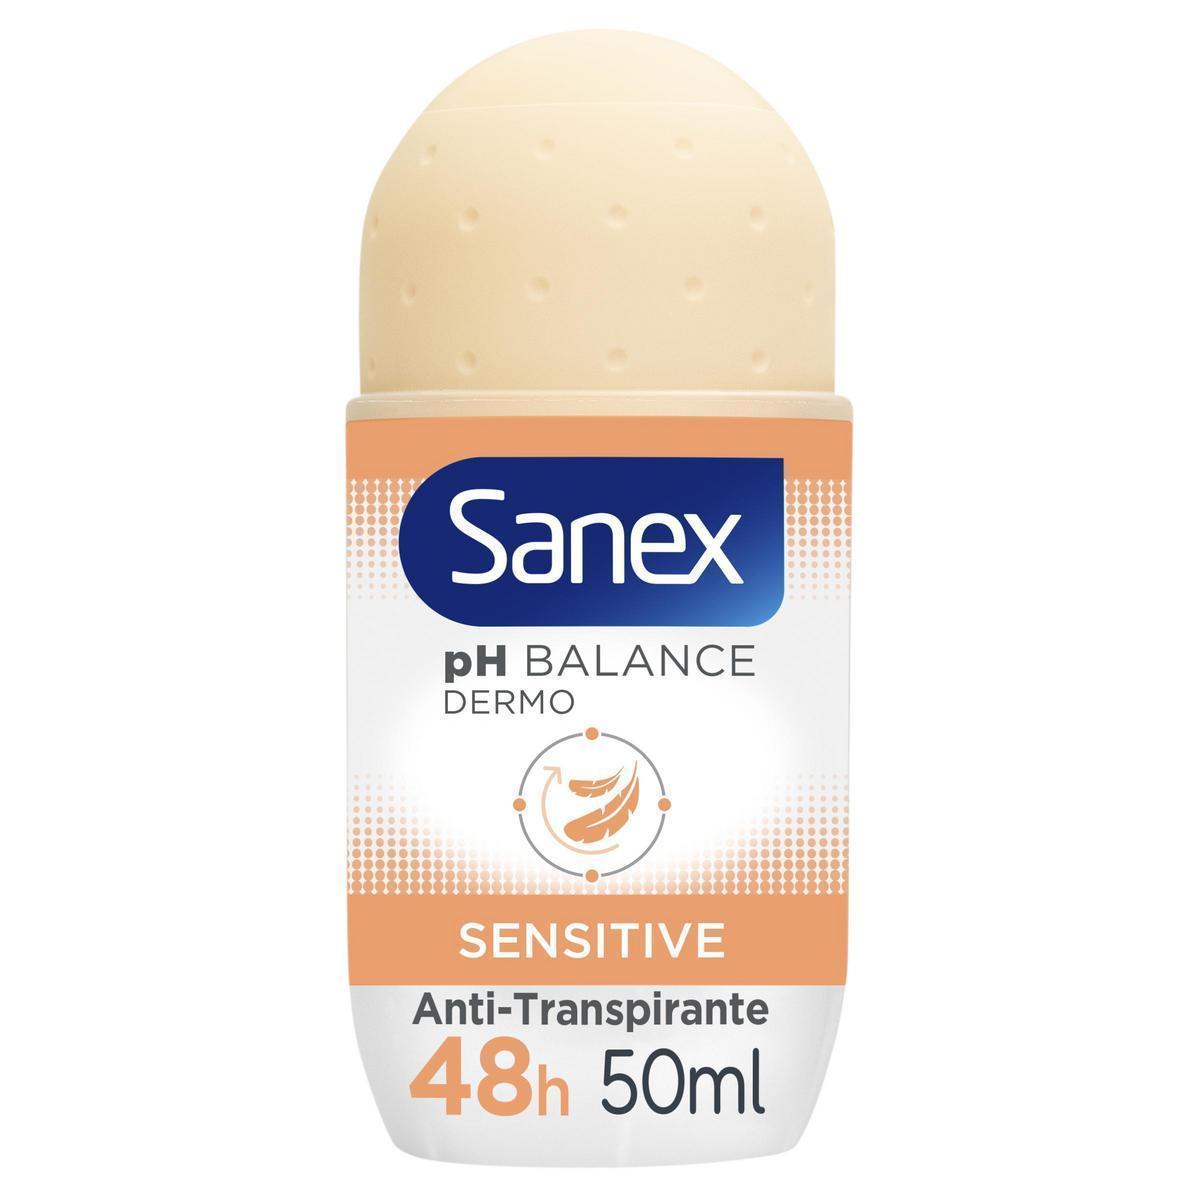 Sanex - Desodorante roll-on Sanex pH Balance Dermo Sensitive 48h antitranspirante, piel sensible 50ml